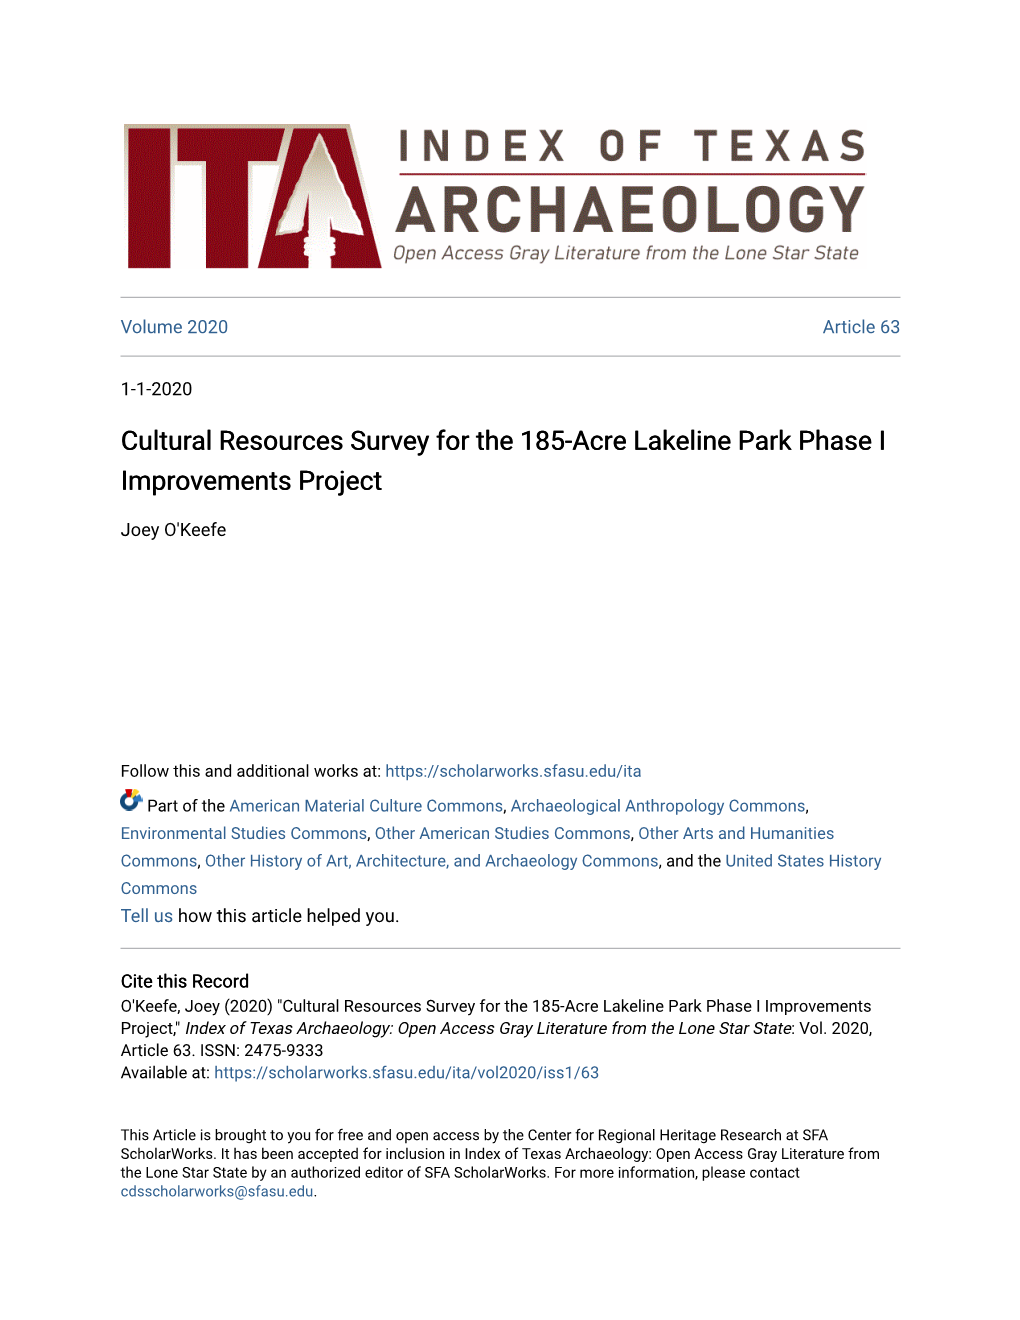 Cultural Resources Survey for the 185-Acre Lakeline Park Phase I Improvements Project